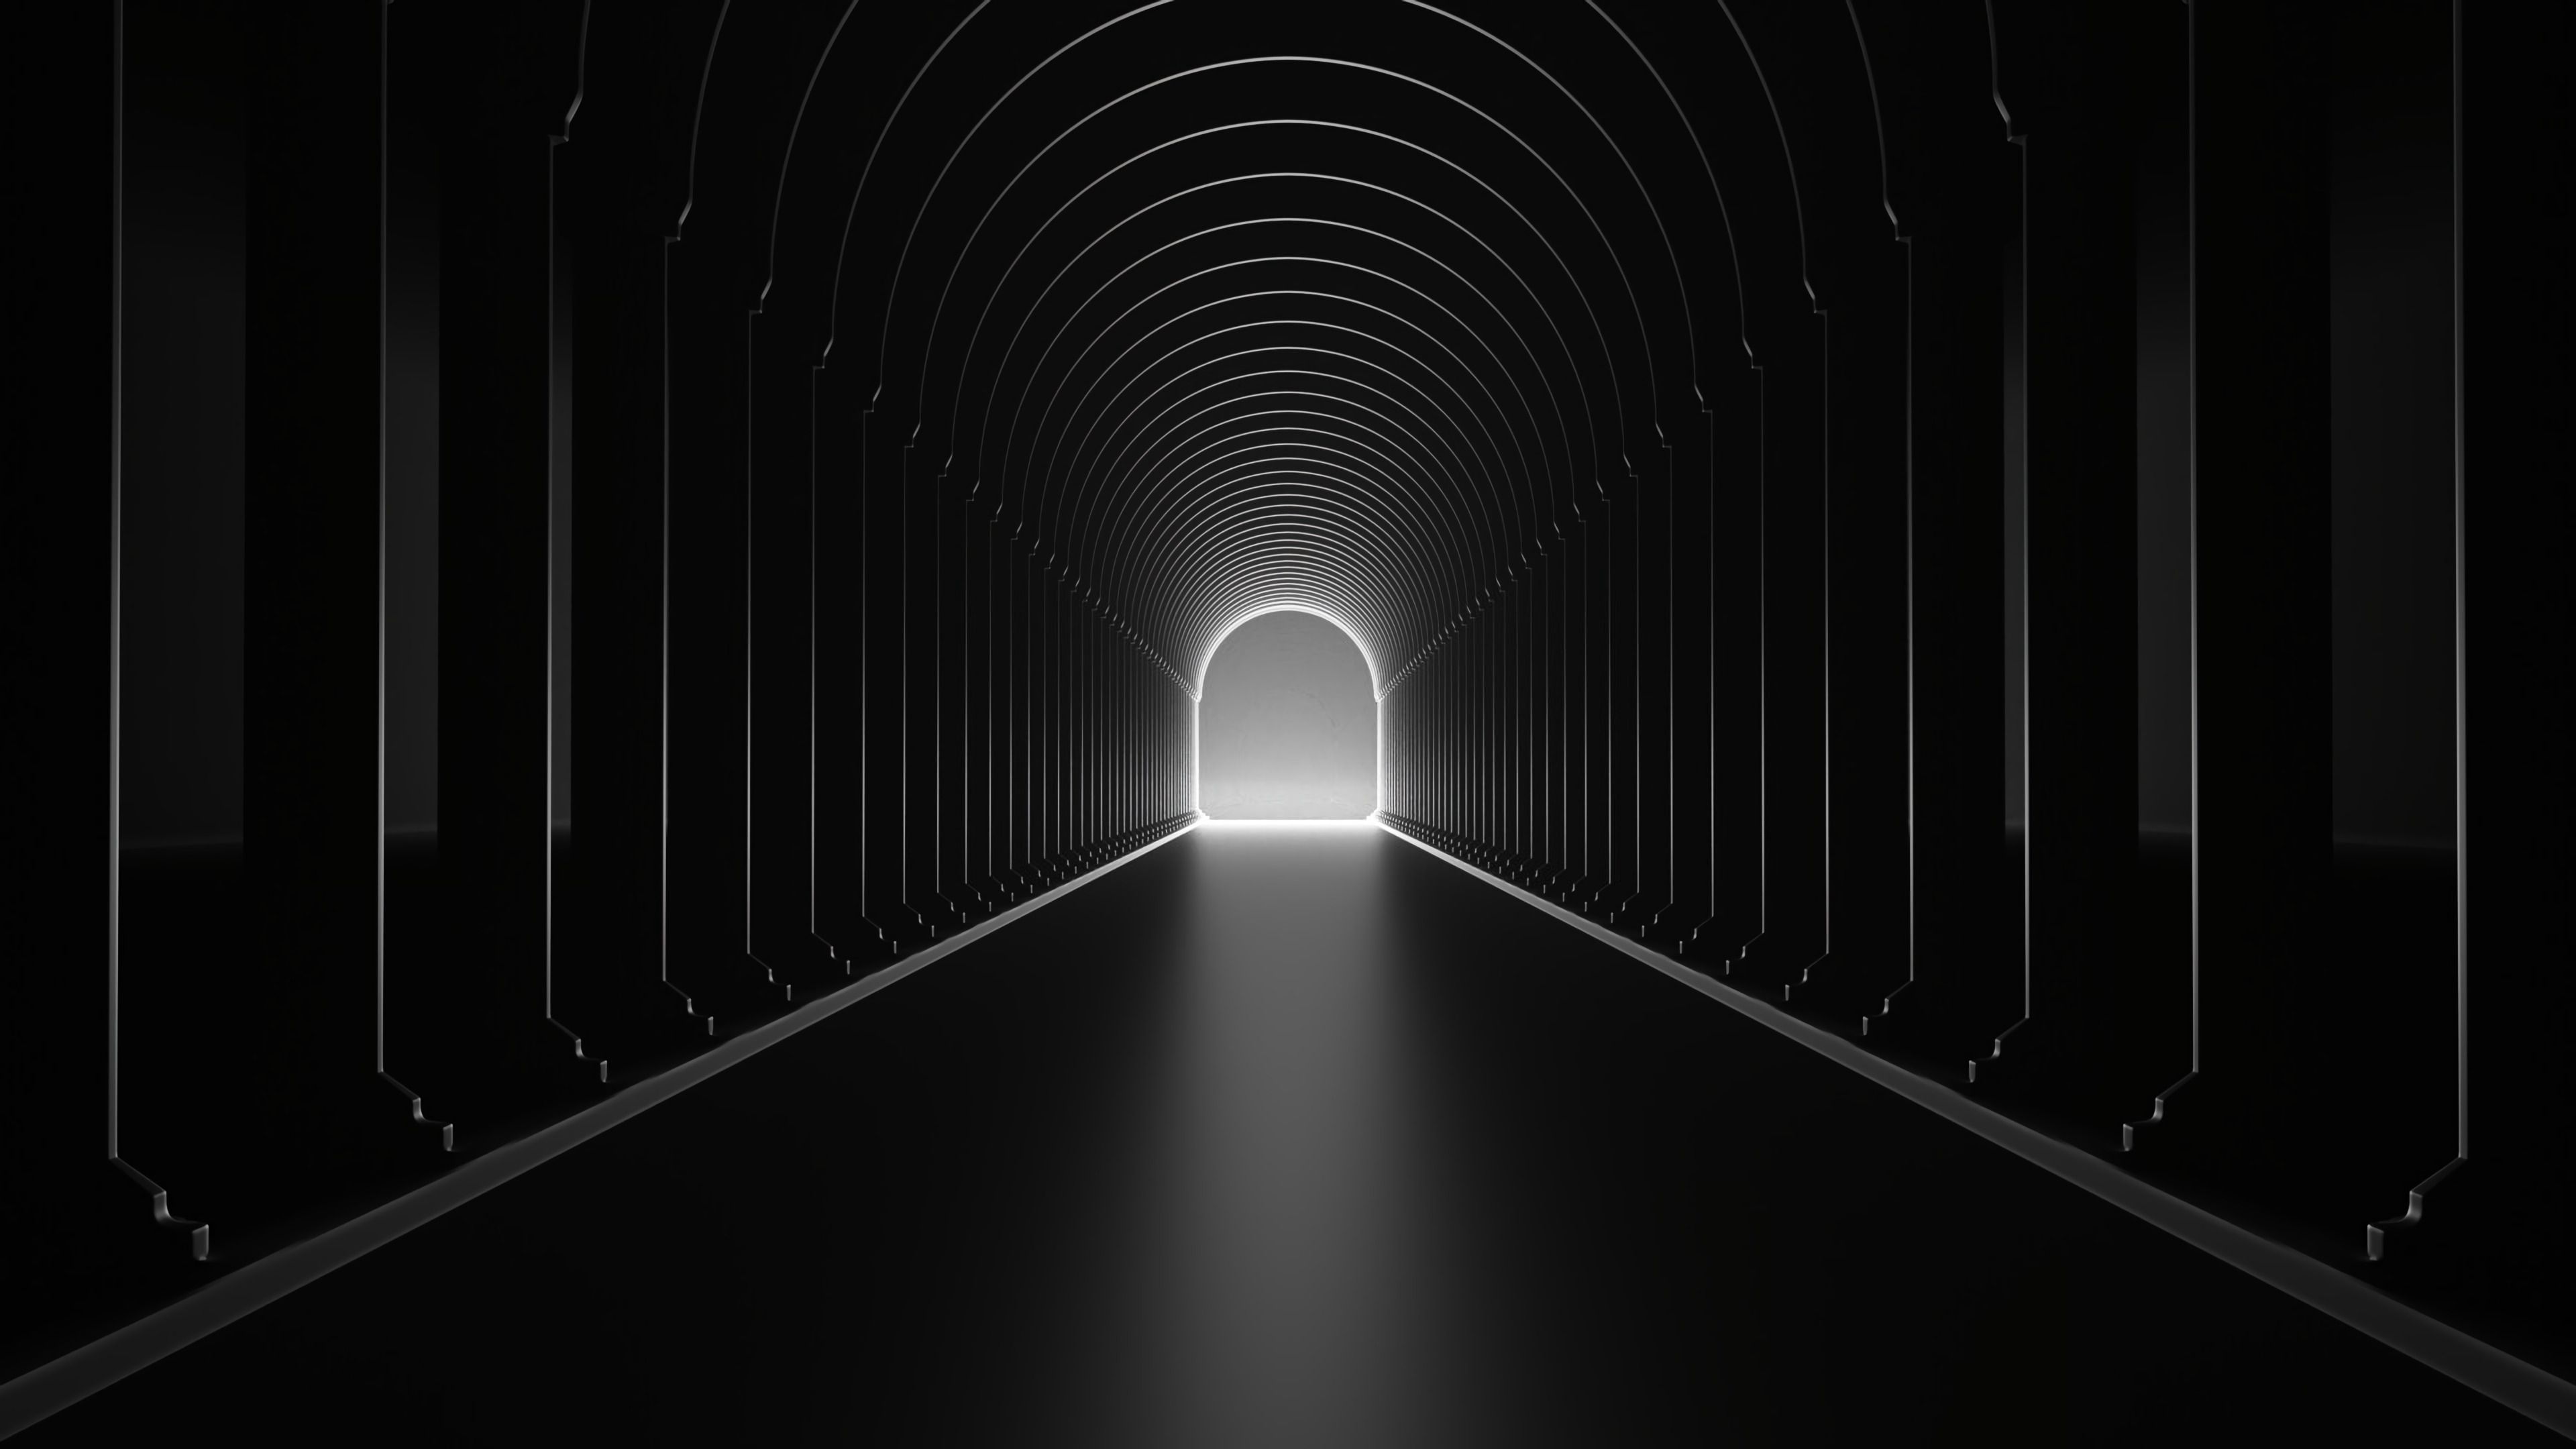 glow, black, bw, chb, dahl, distance, arch, tunnel Free Stock Photo